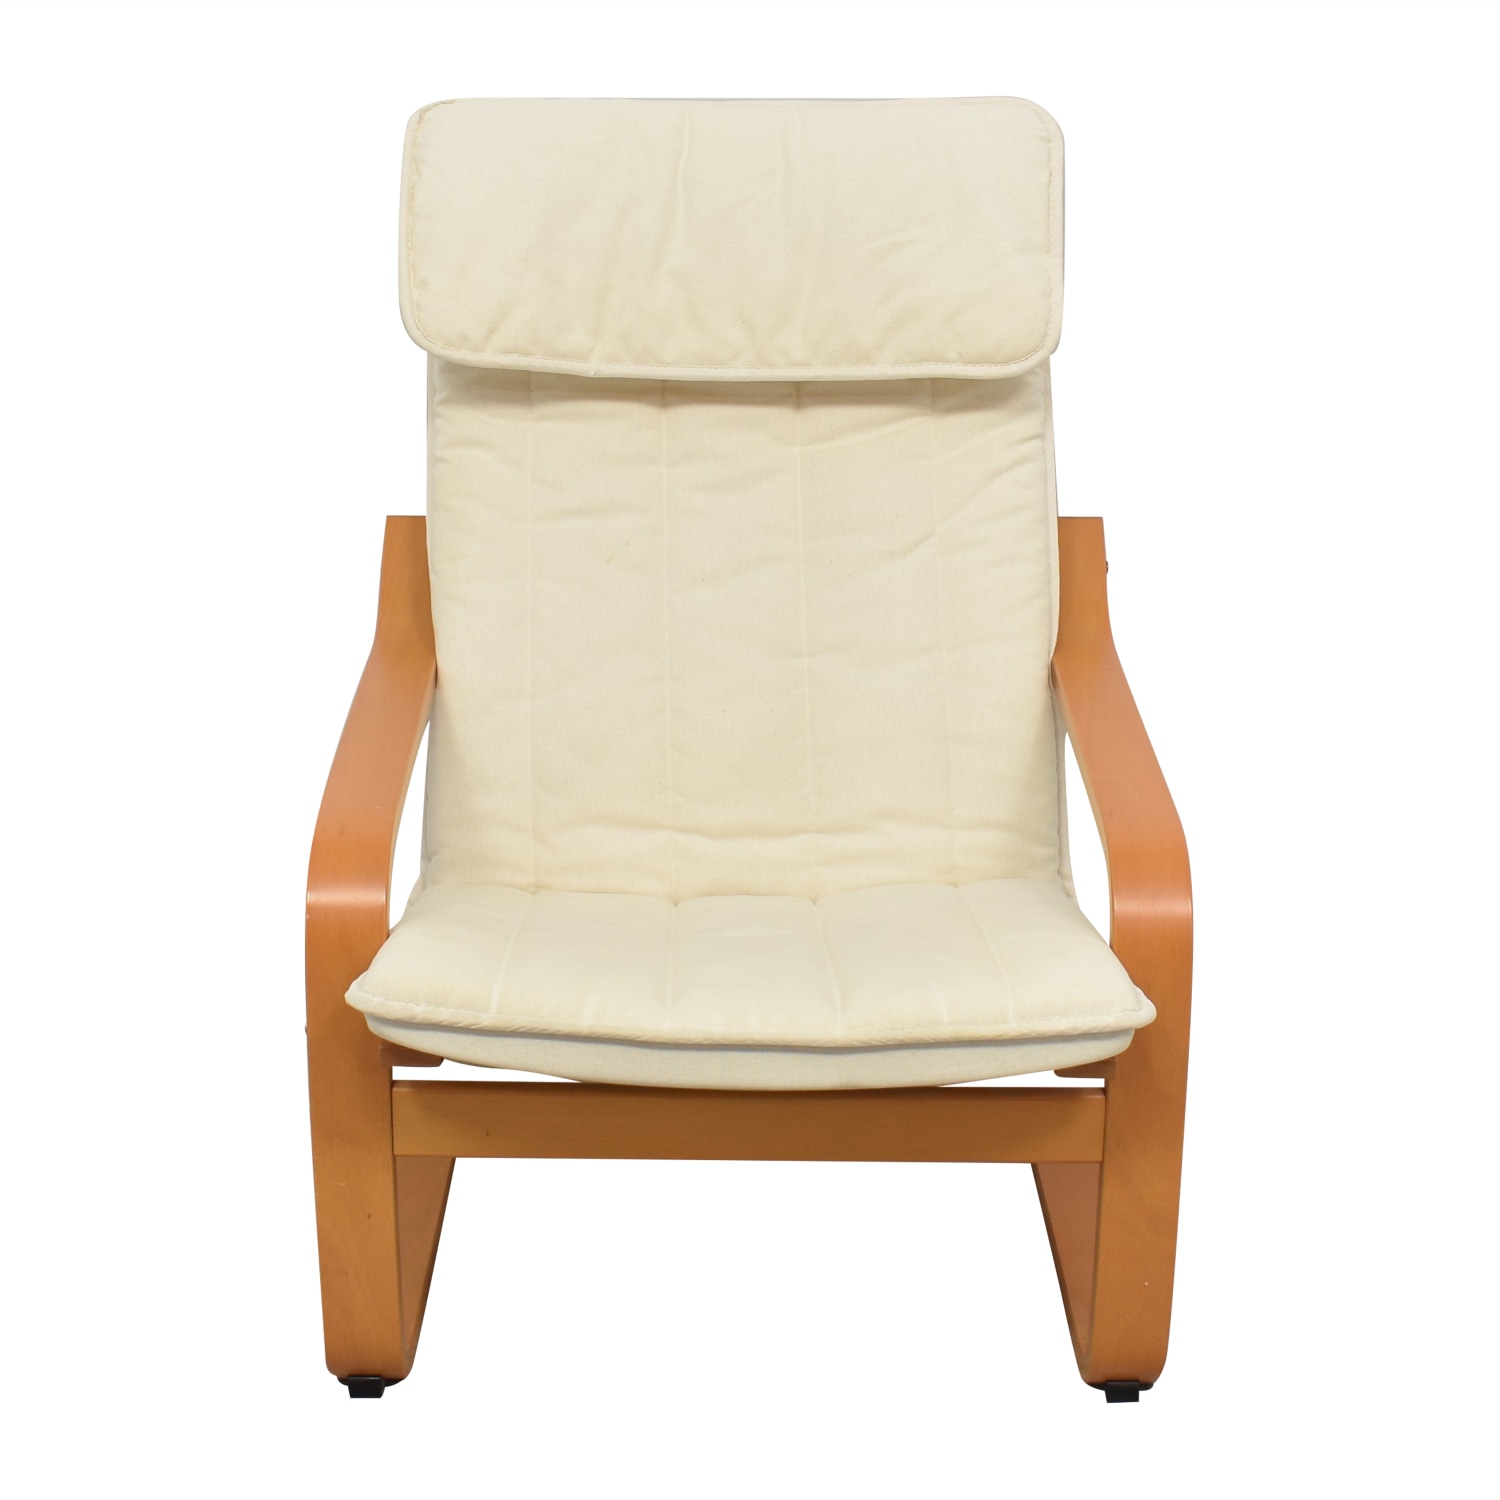 https://res.cloudinary.com/dkqtxtobb/image/upload/f_auto,q_auto:best,w_1500/product-assets/285535/ikea/chairs/accent-chairs/ikea-poang-accent-chair.jpeg